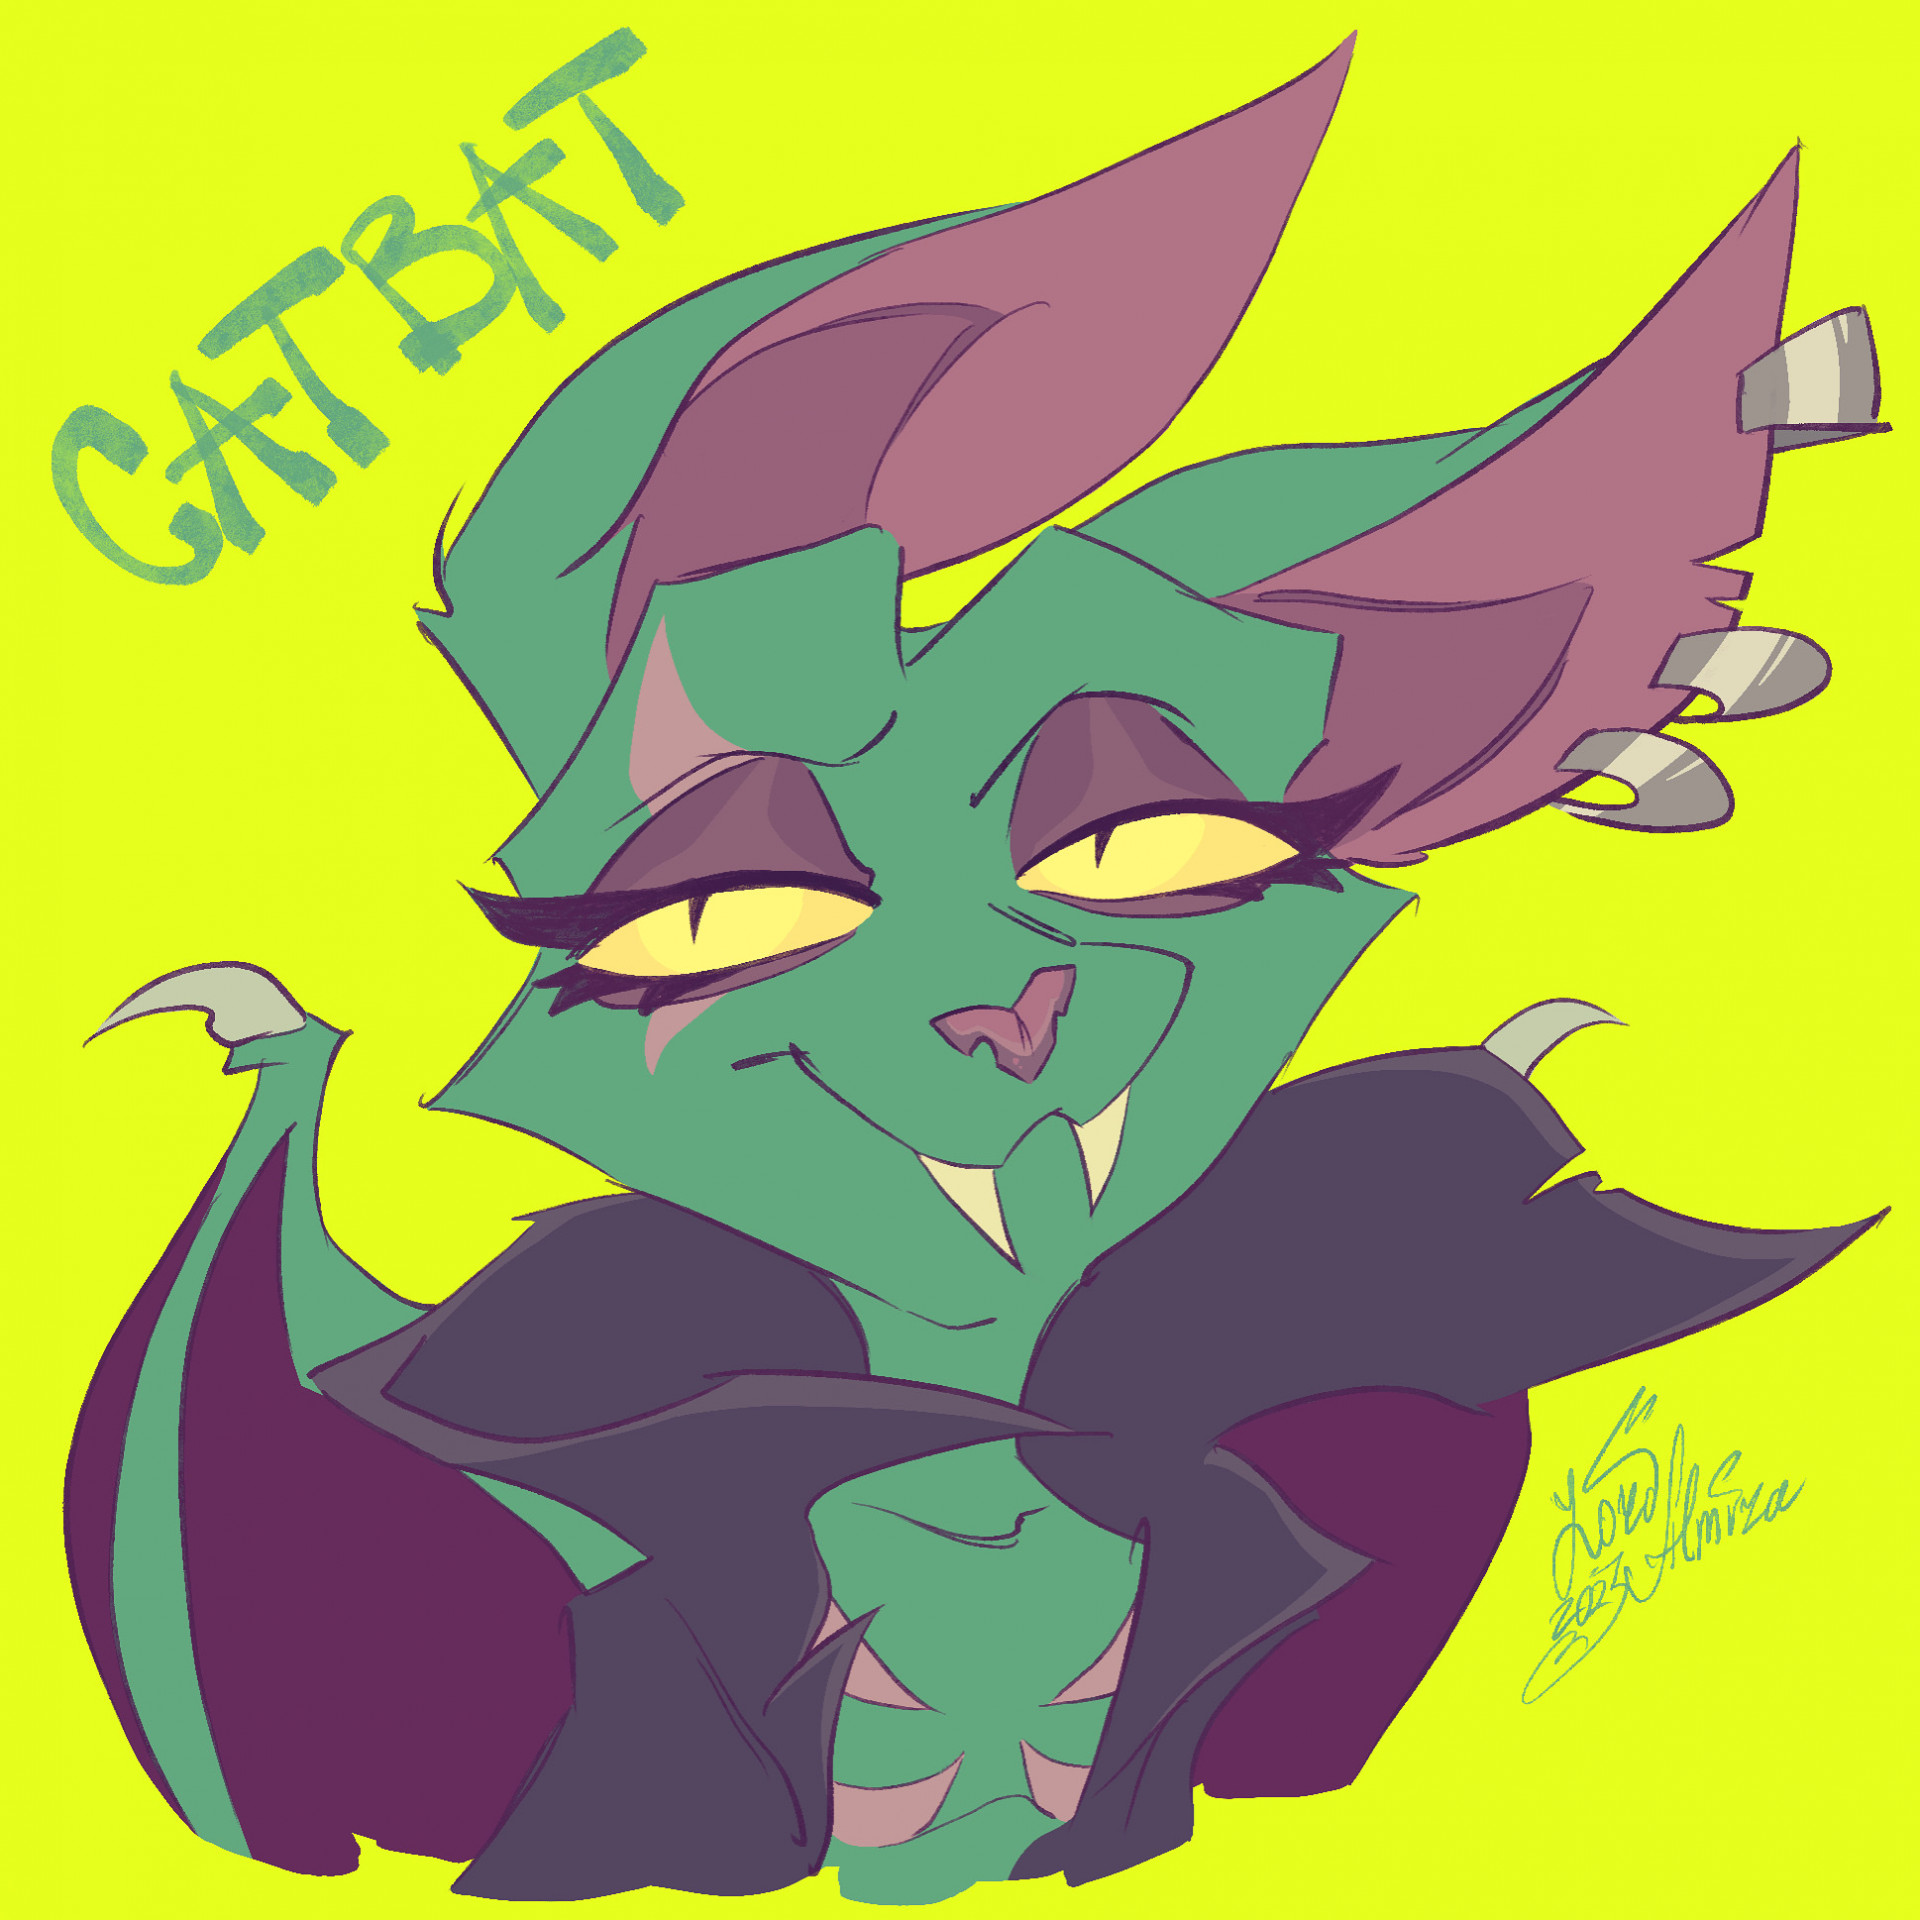 Catbat is Crash Bandicoot's First Non-Binary Character